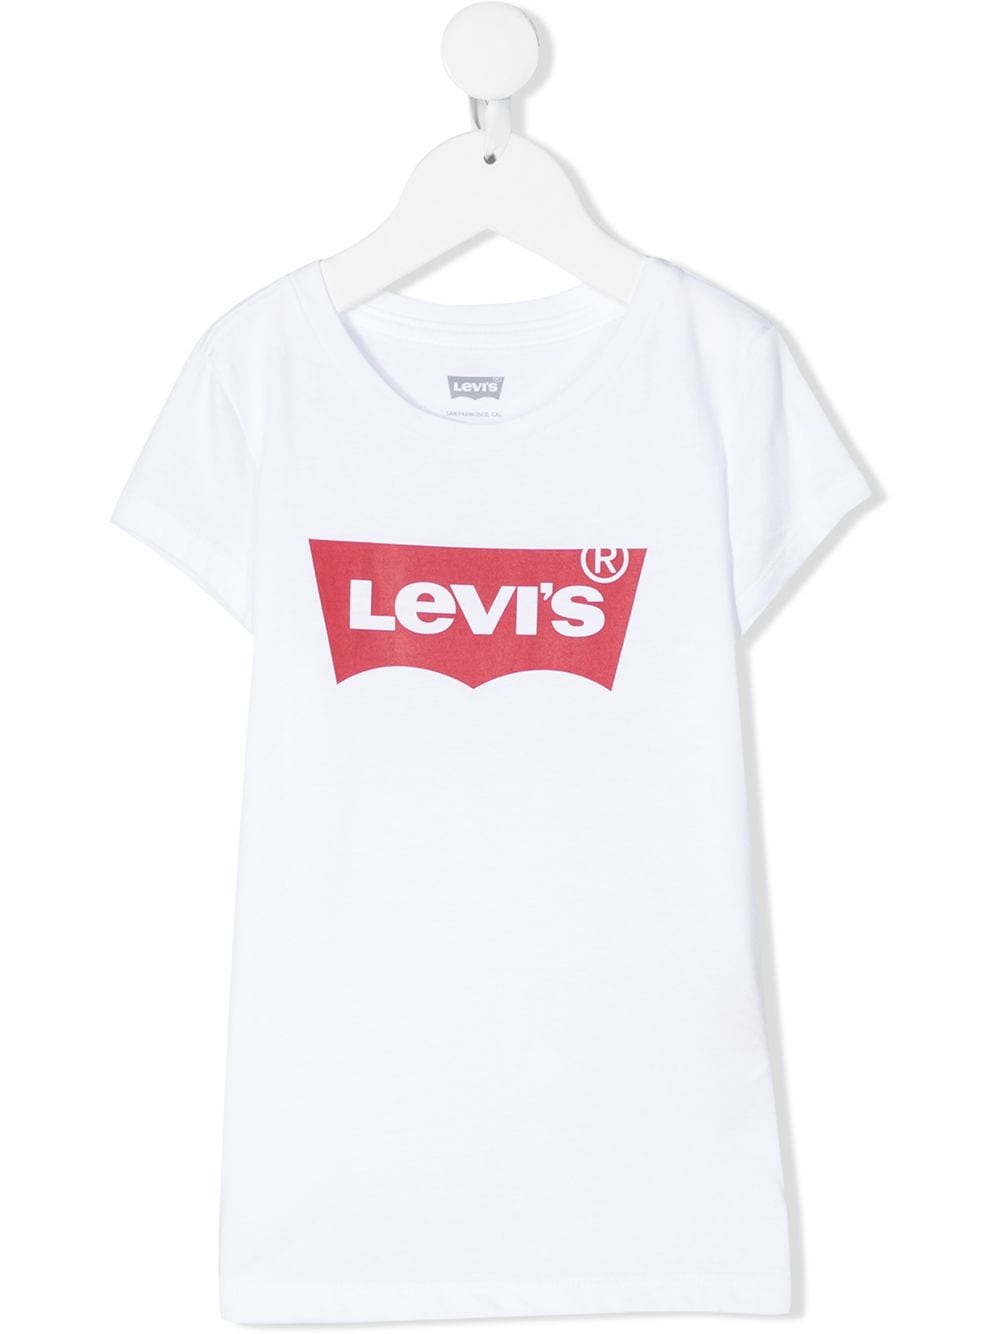 Levi's Kids short sleeve printed logo T-shirt - White von Levi's Kids